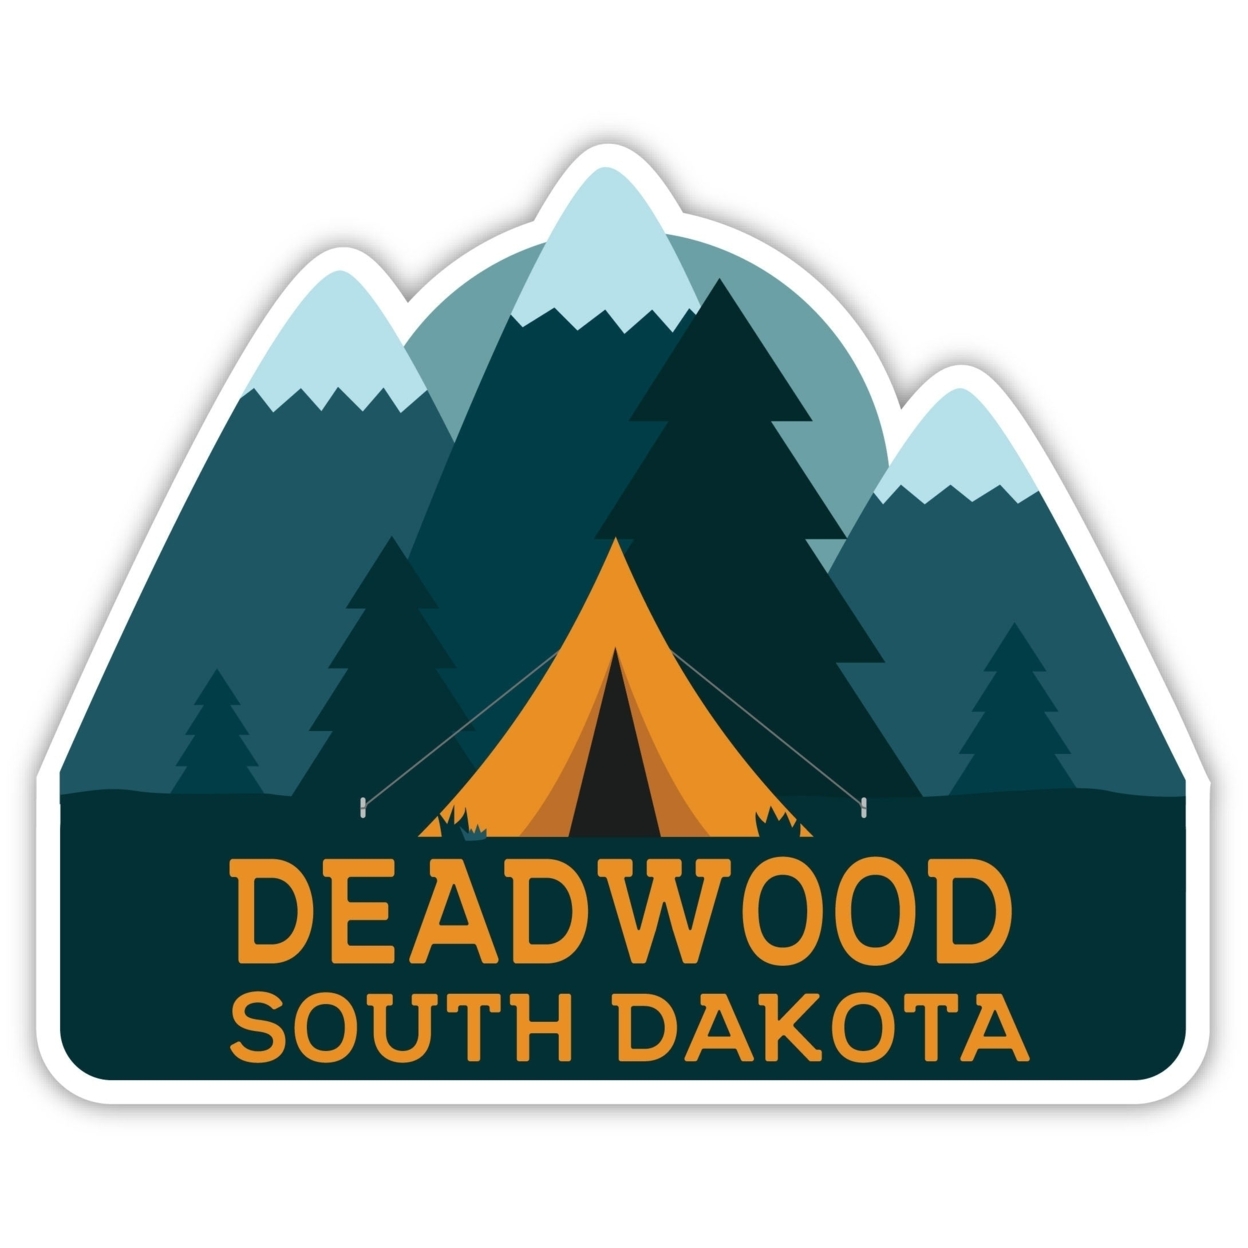 Deadwood South Dakota Souvenir Decorative Stickers (Choose Theme And Size) - Single Unit, 2-Inch, Camp Life